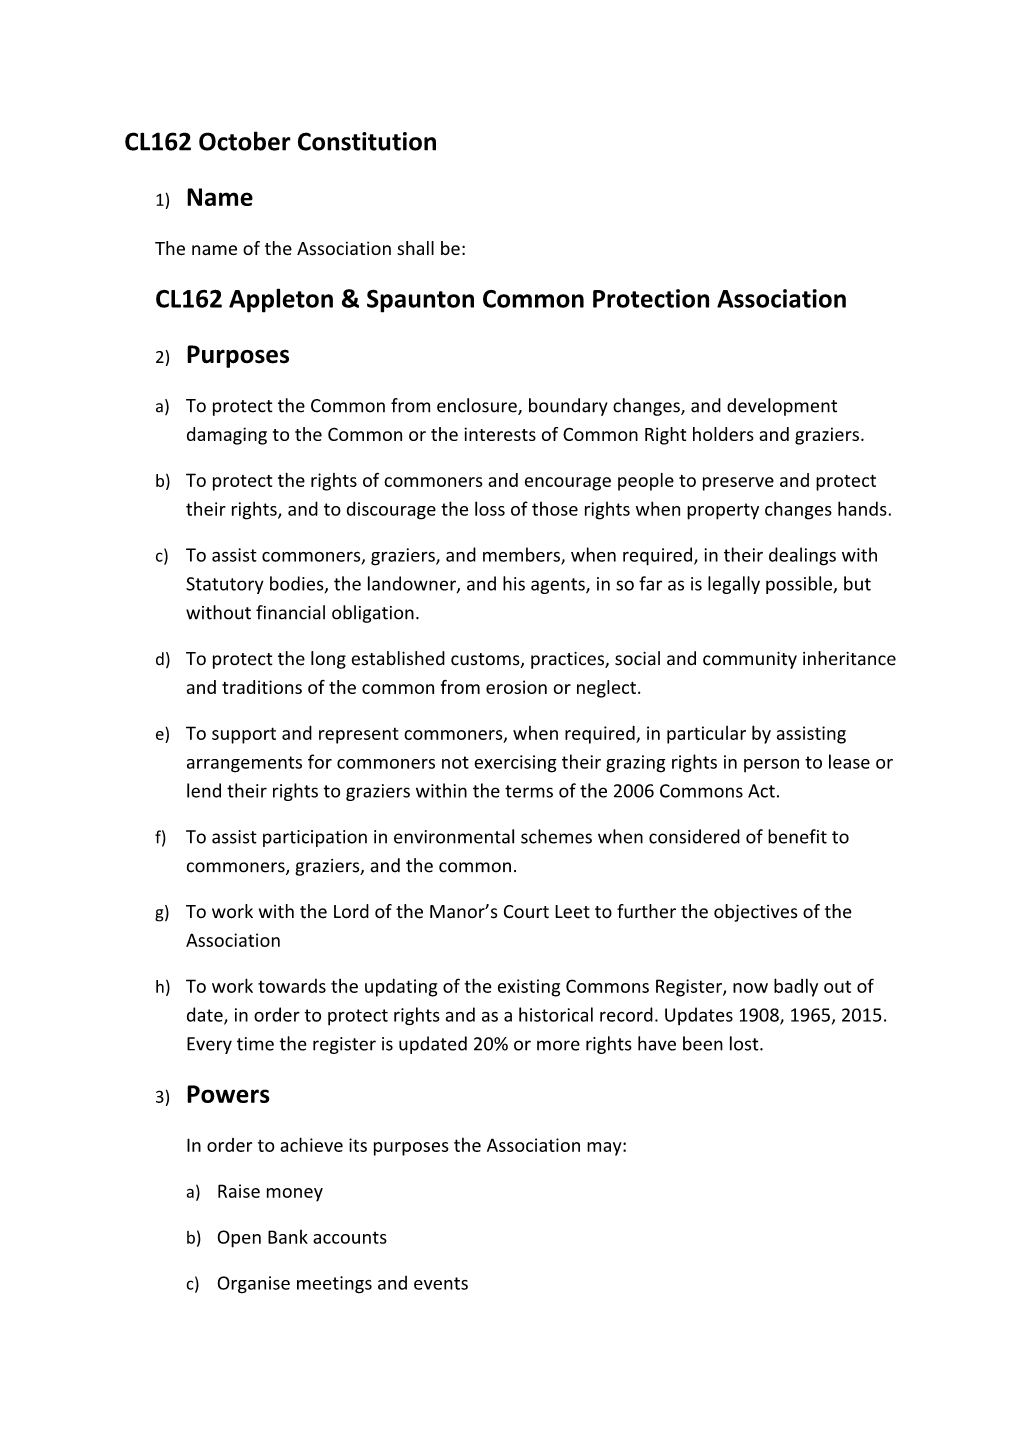 CL162 Appleton & Spaunton Common Protection Association